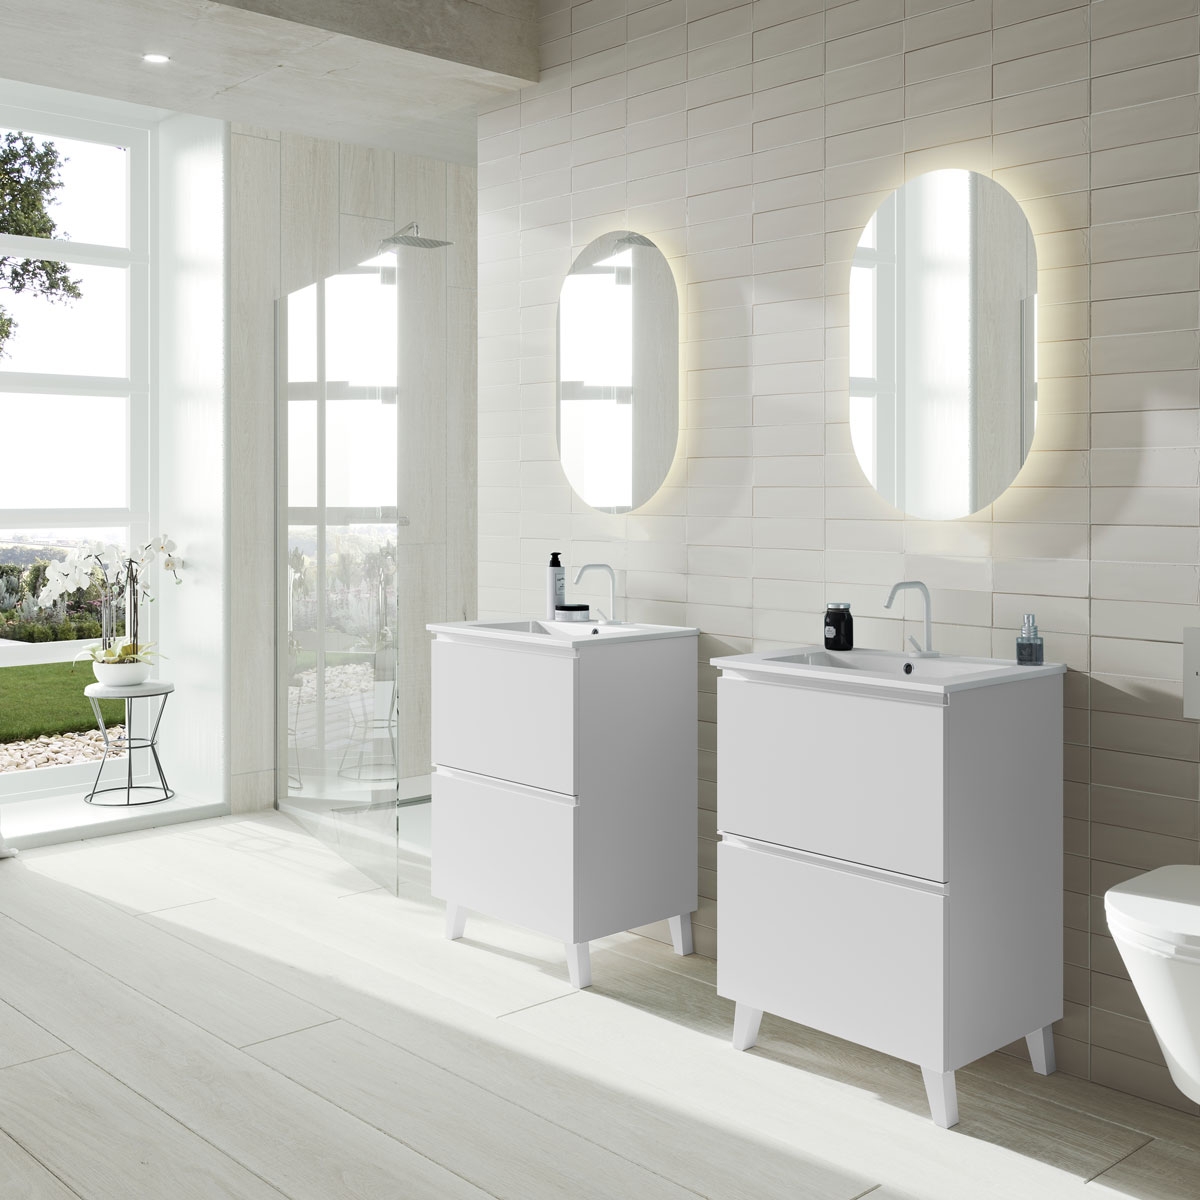 Mueble de baño suspendido 2 cajones con espejo, sin lavabo, 80 cm